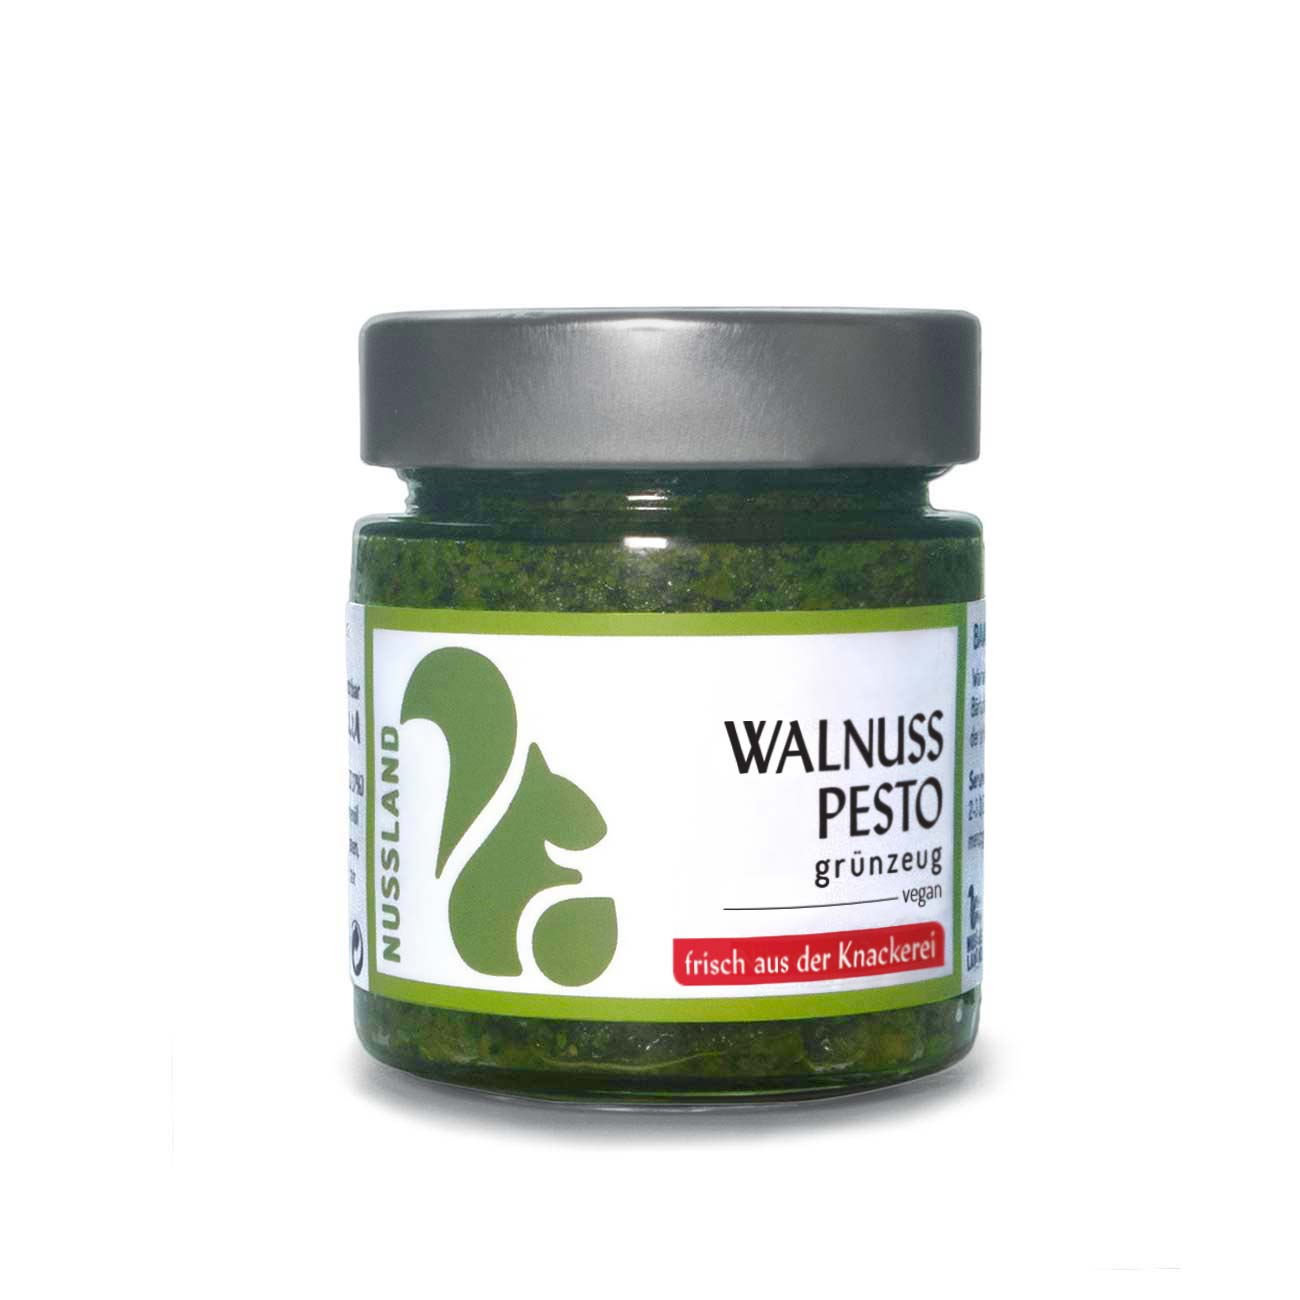 Walnuss-Pesto 'gruenzeug'